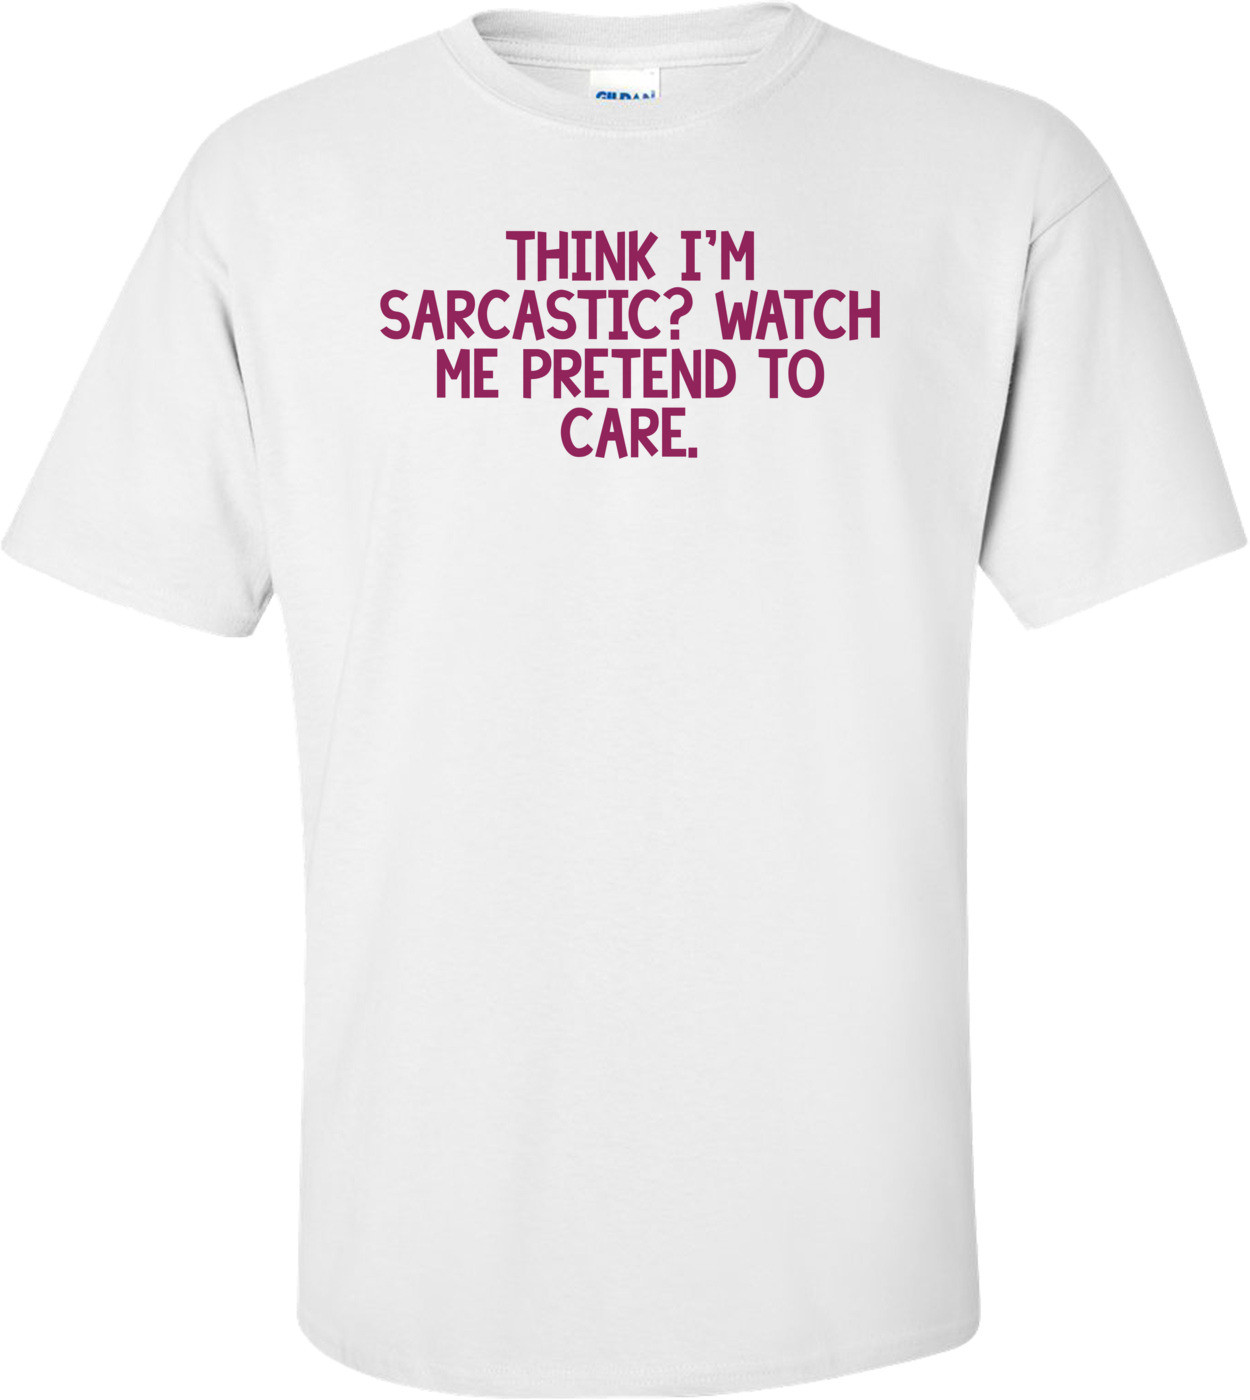 THINK I'M SARCASTIC? WATCH ME PRETEND TO CARE. Shirt